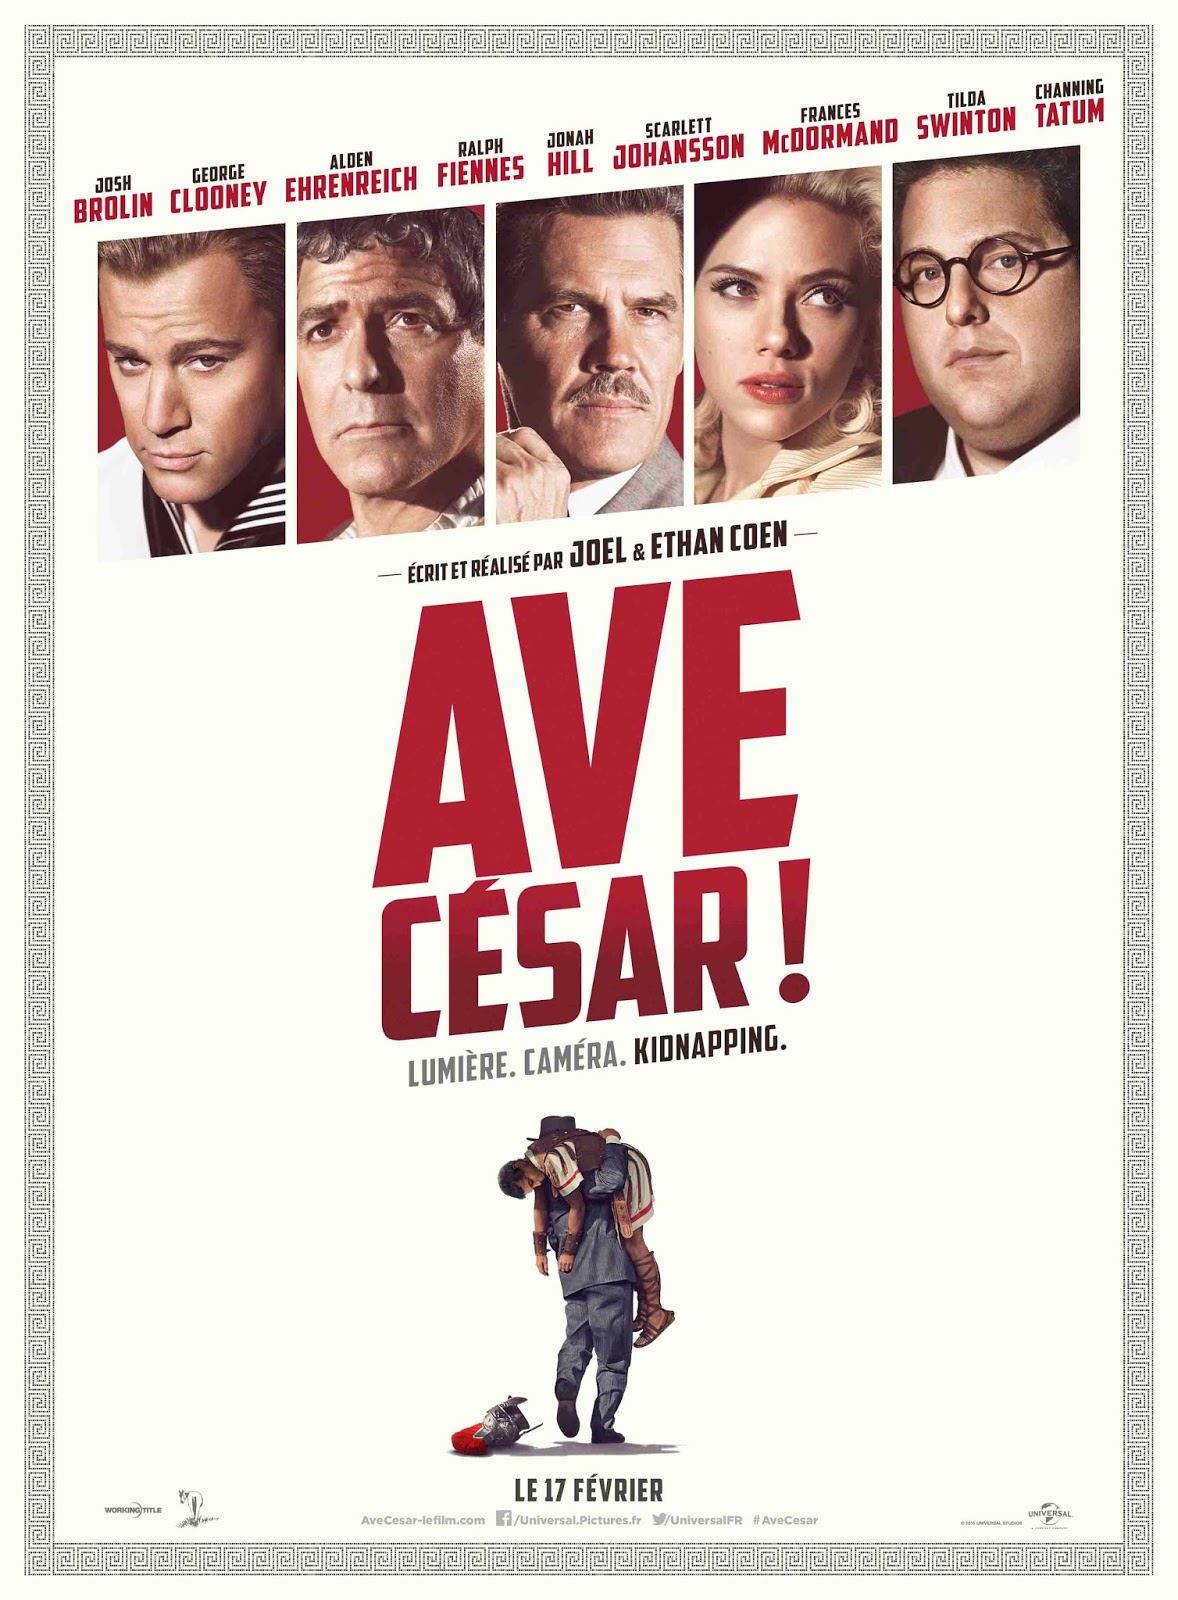 Ave, César! Torrent - Blu-ray Rip 720p e 1080p Dual Áudio (2016)